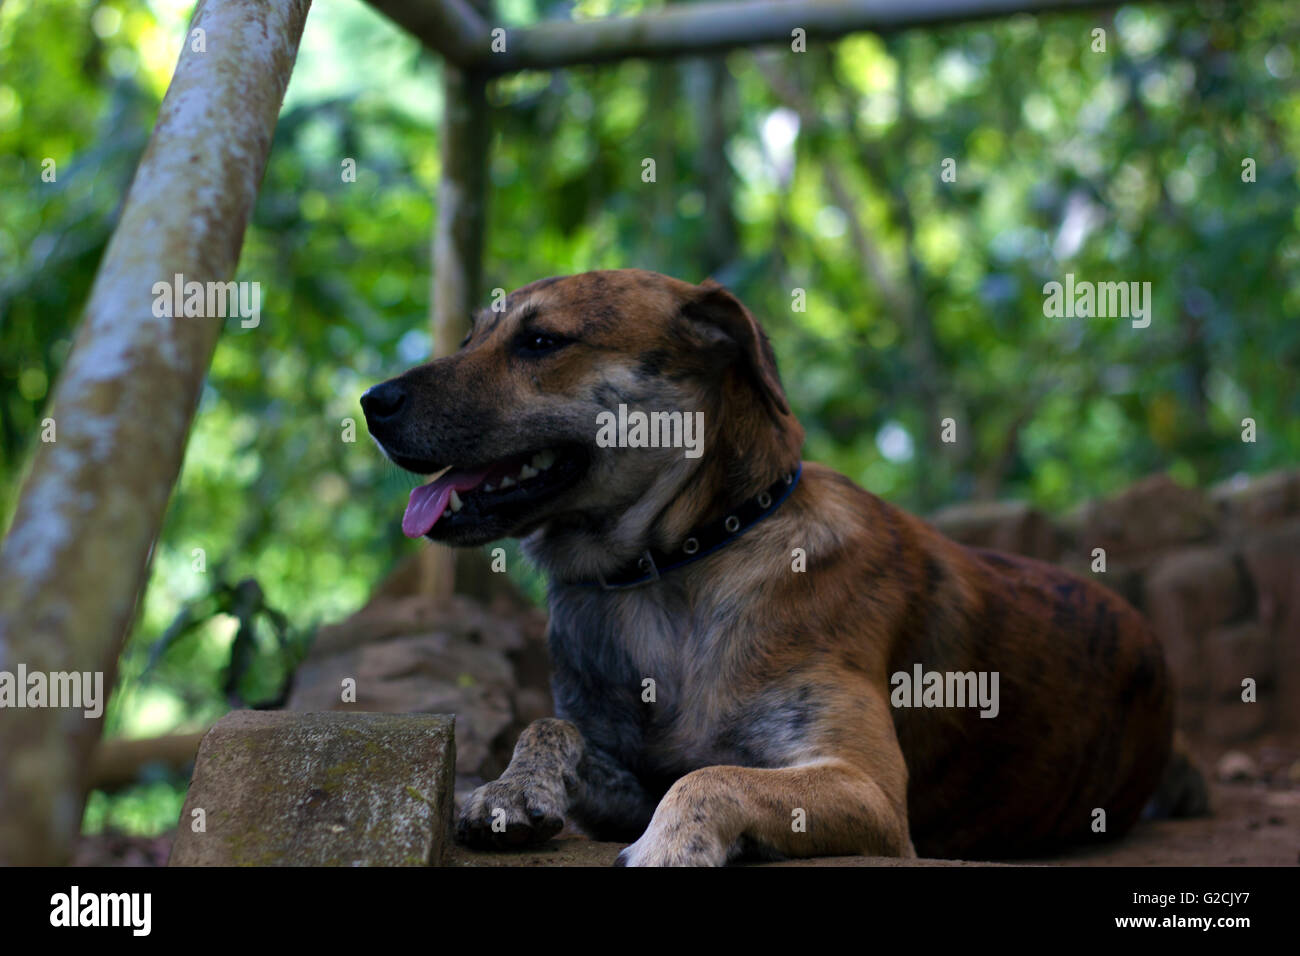 Dark Brown Dog Sitting showing its tongue Stock Photo